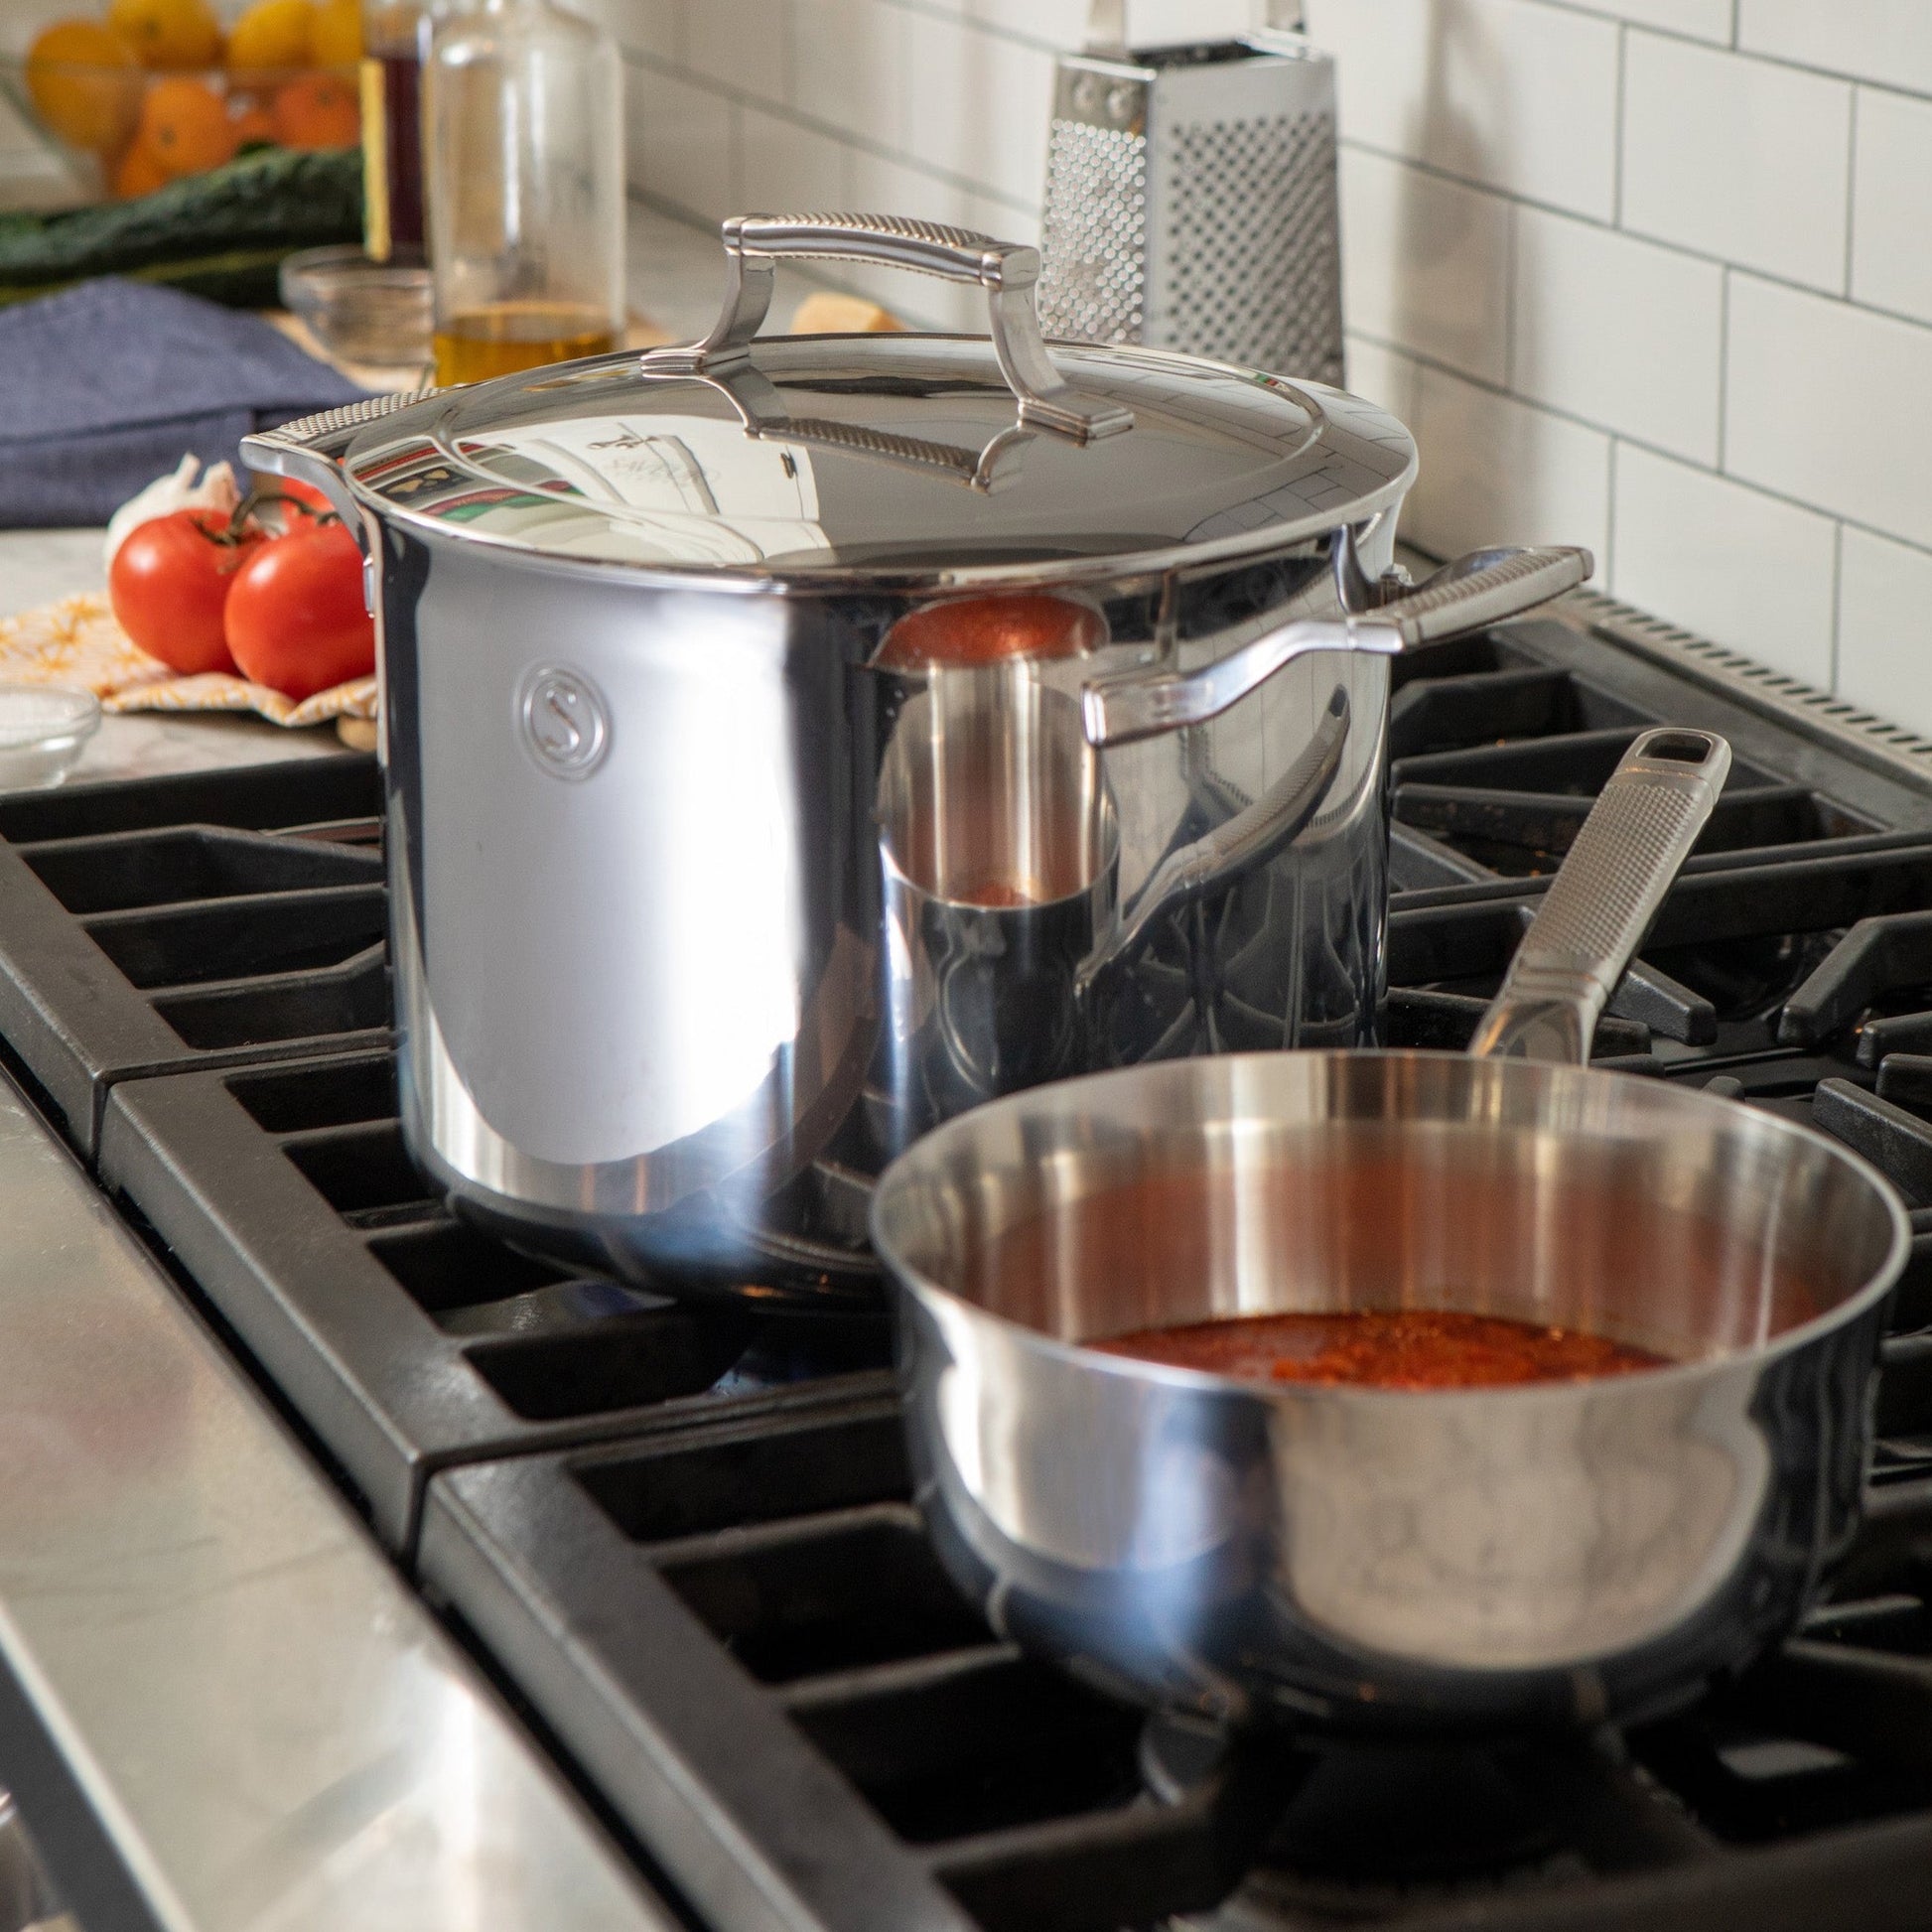 Cookware Set Kitchen Stainless Steel 9-Piece Cooking Pot Set